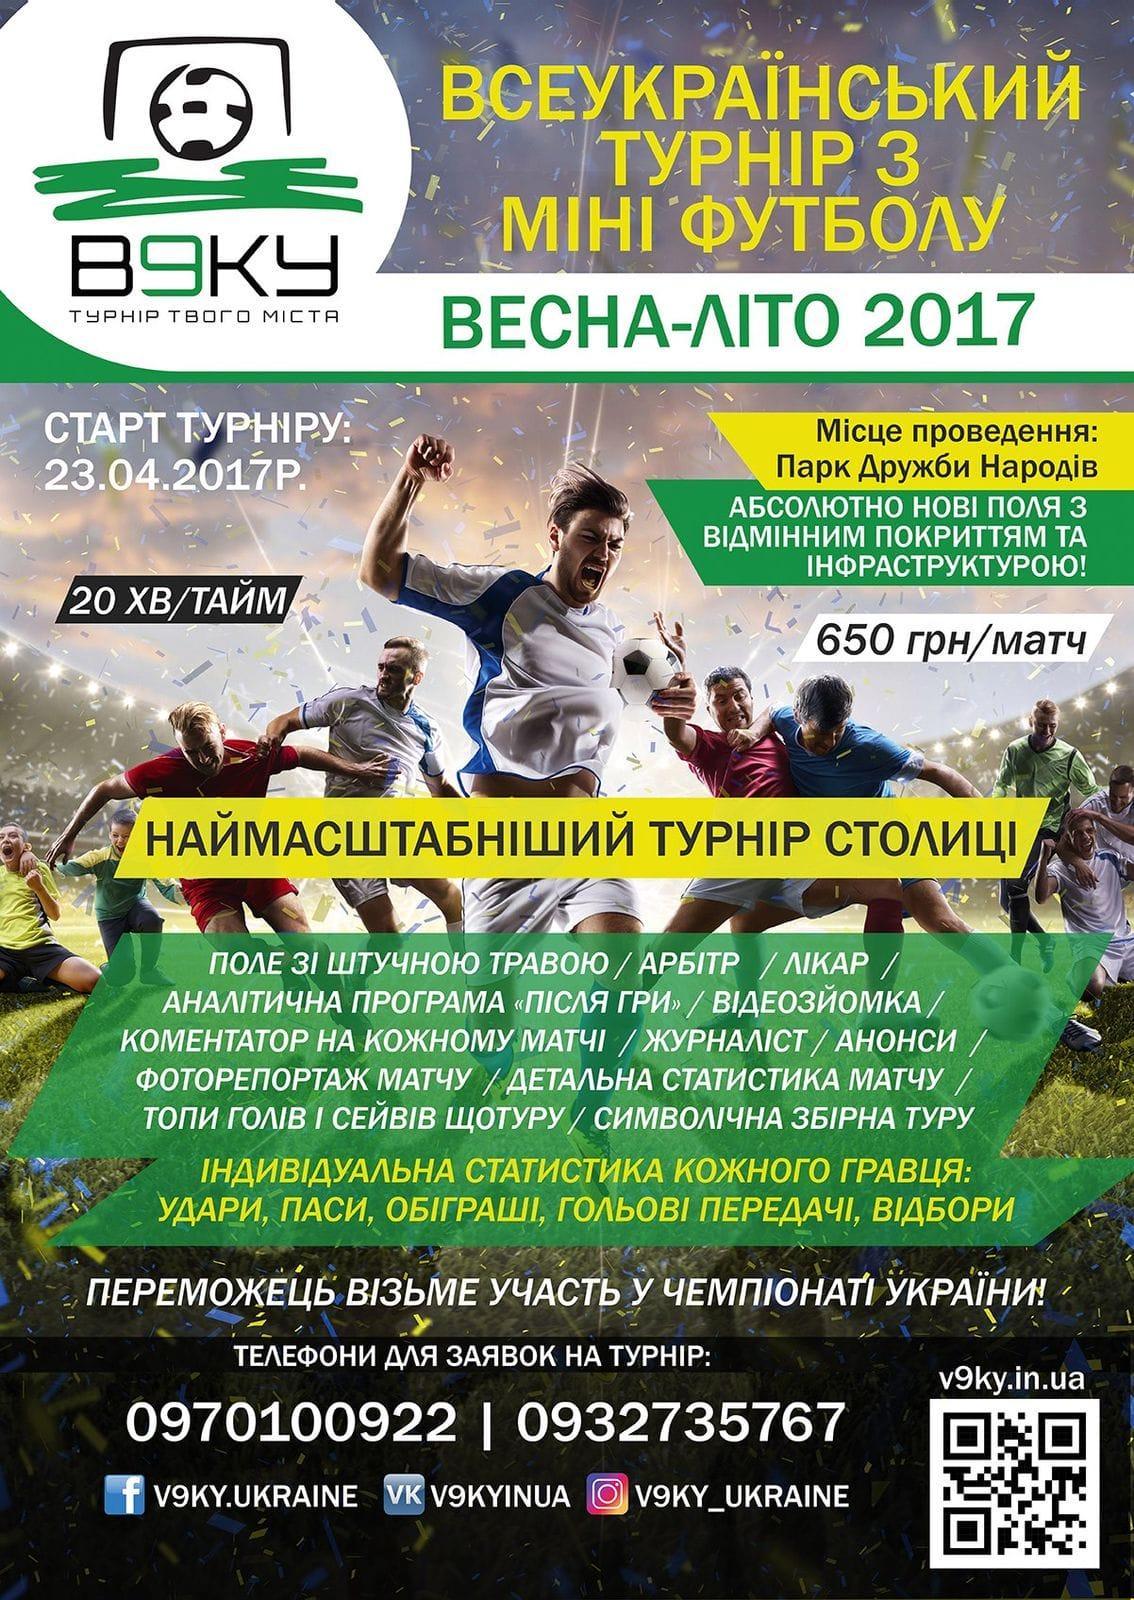 9тка турнир с мини футбола футзал парк дружбы народов киев